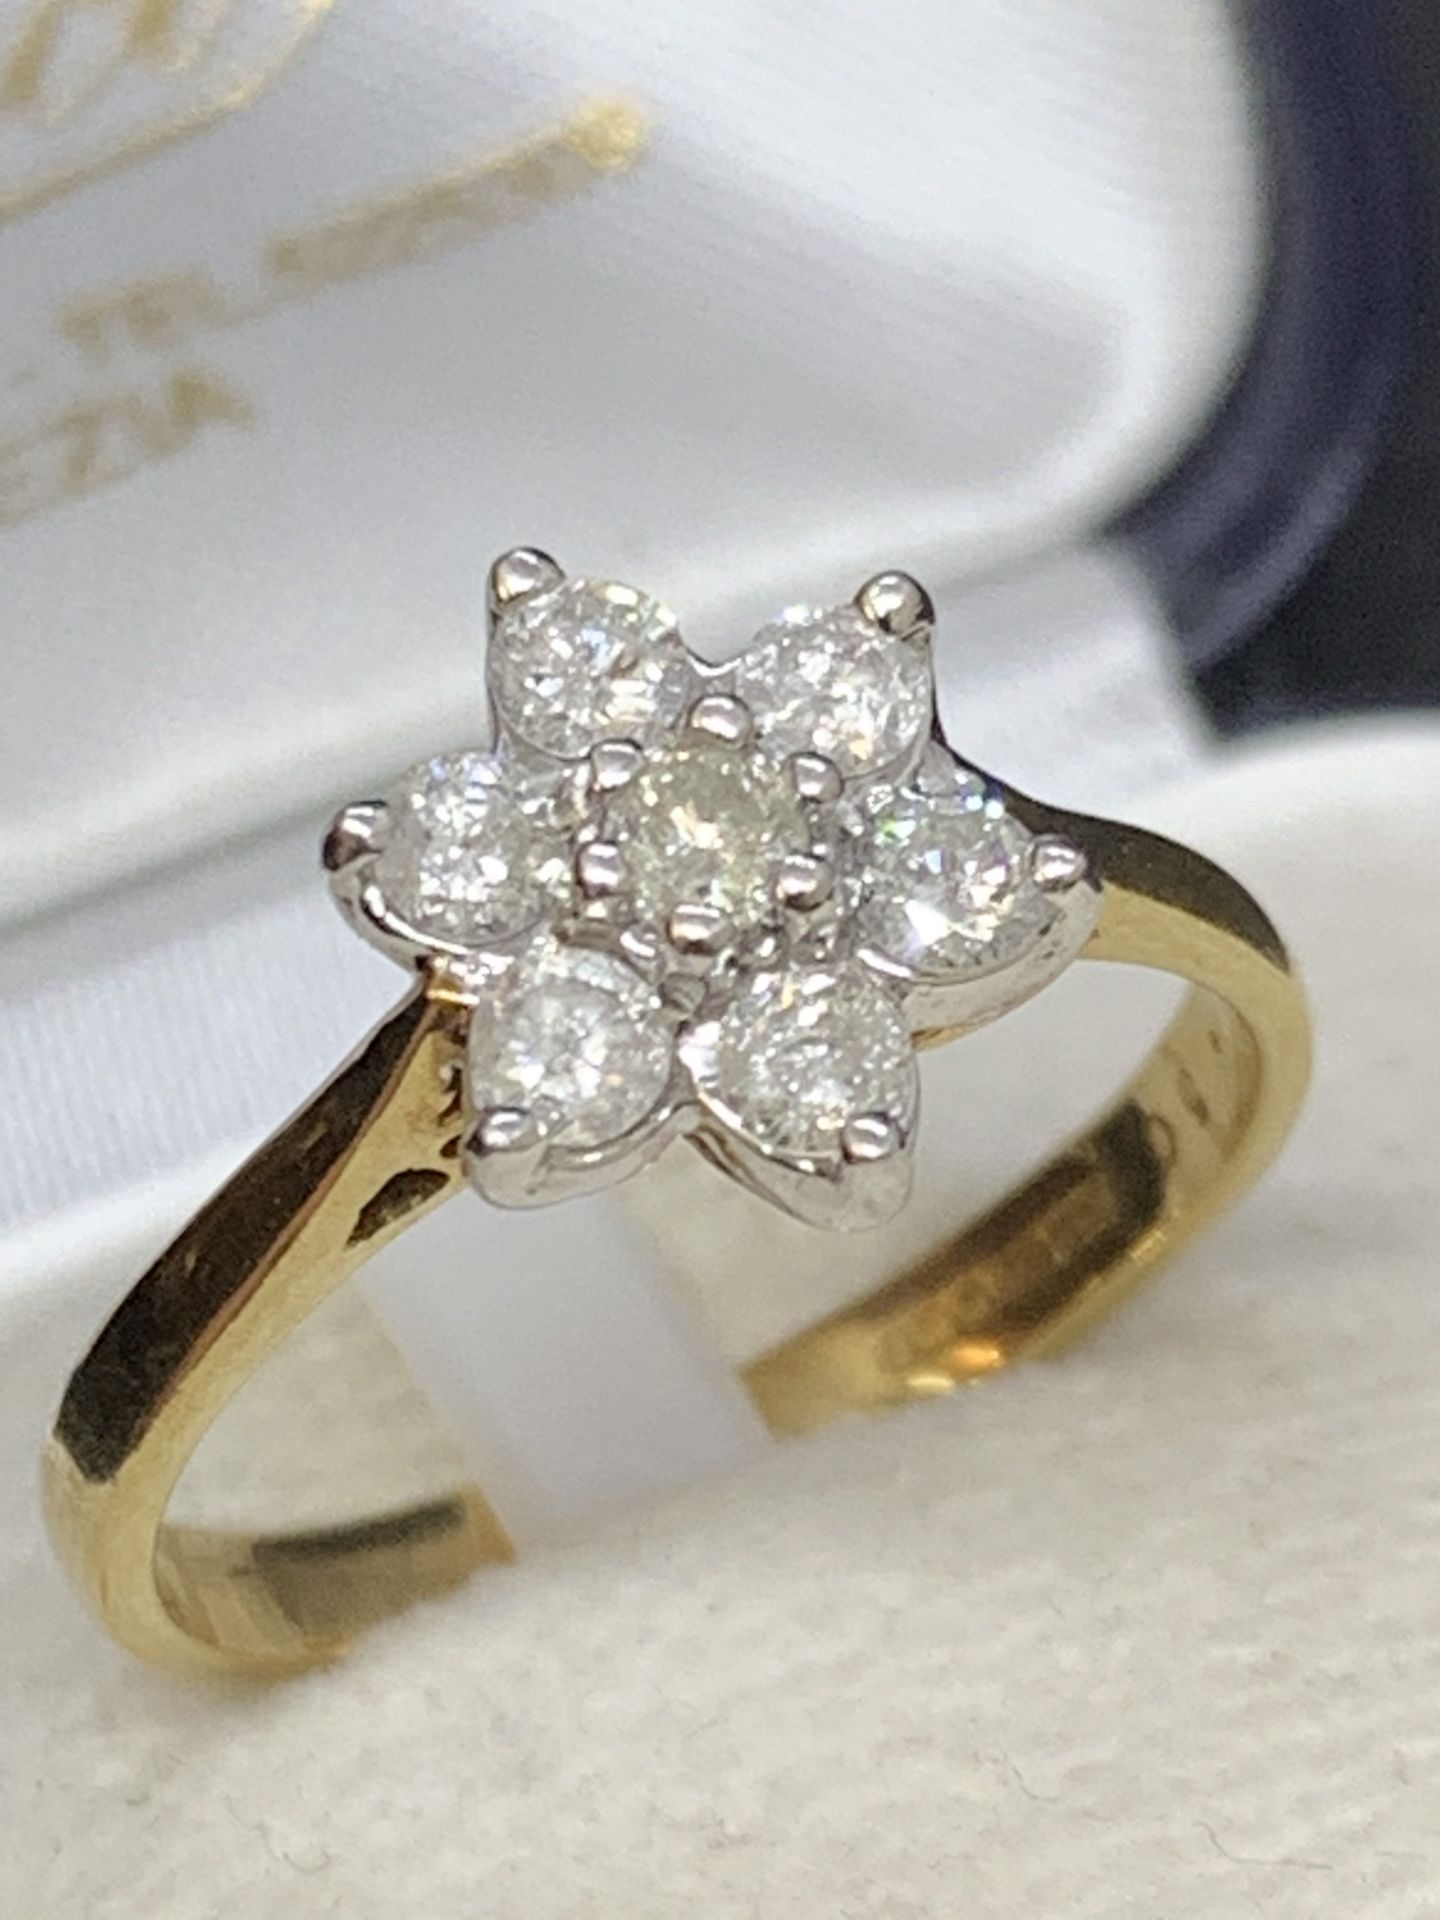 9 carat gold diamond Daisy ring approximately 0.5 carats of diamonds